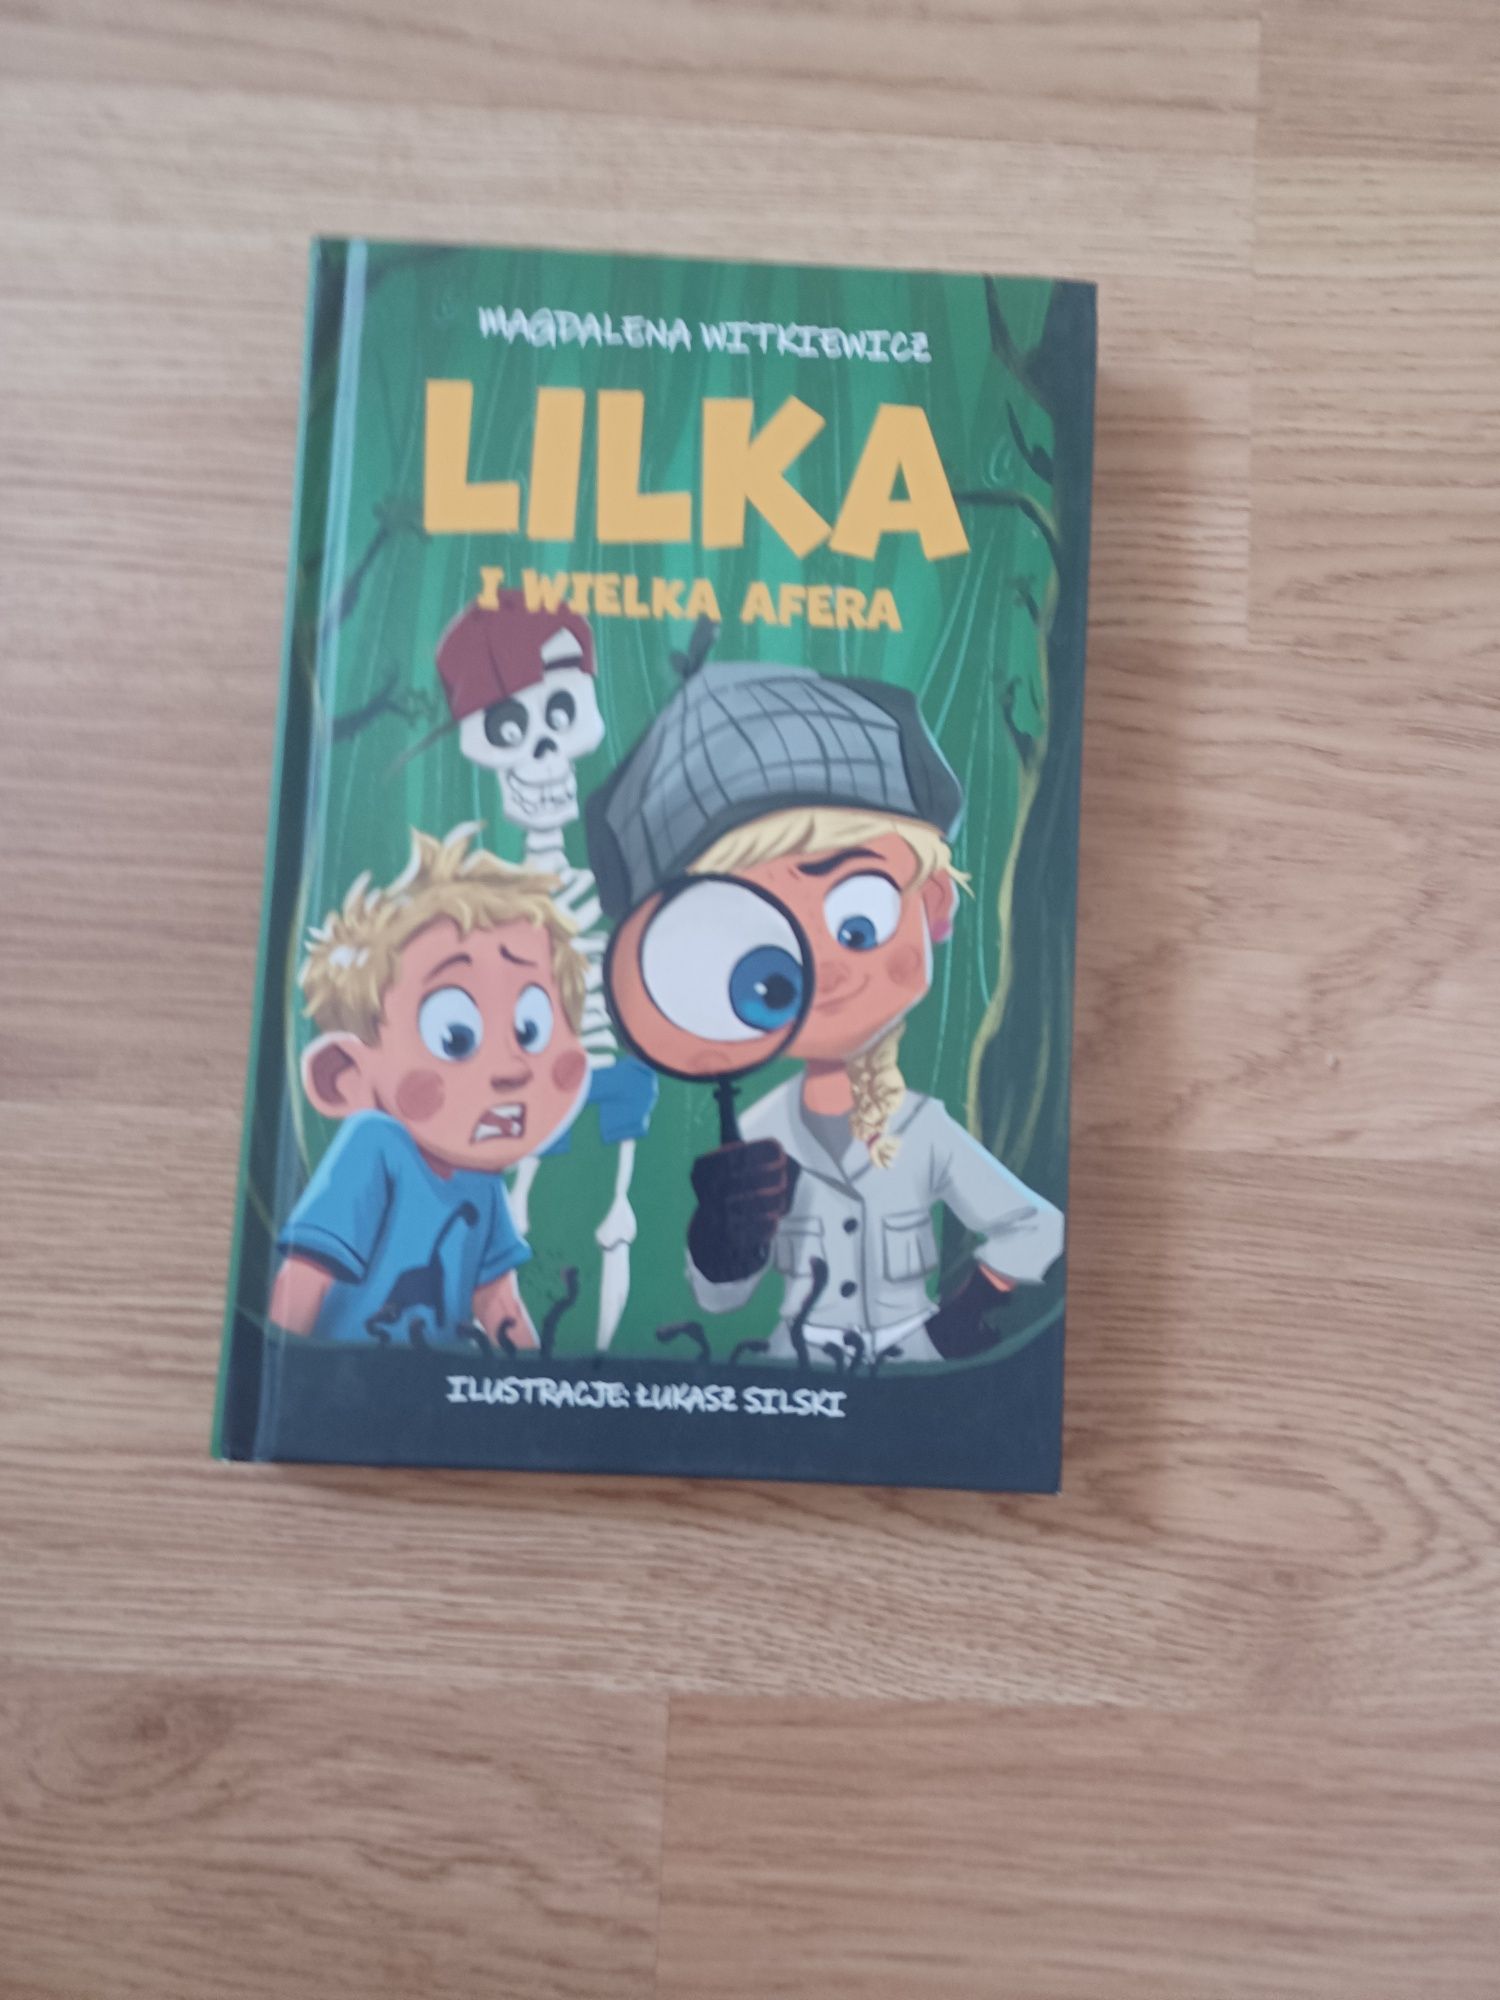 Lilka i wielka afera książka dla dzieci